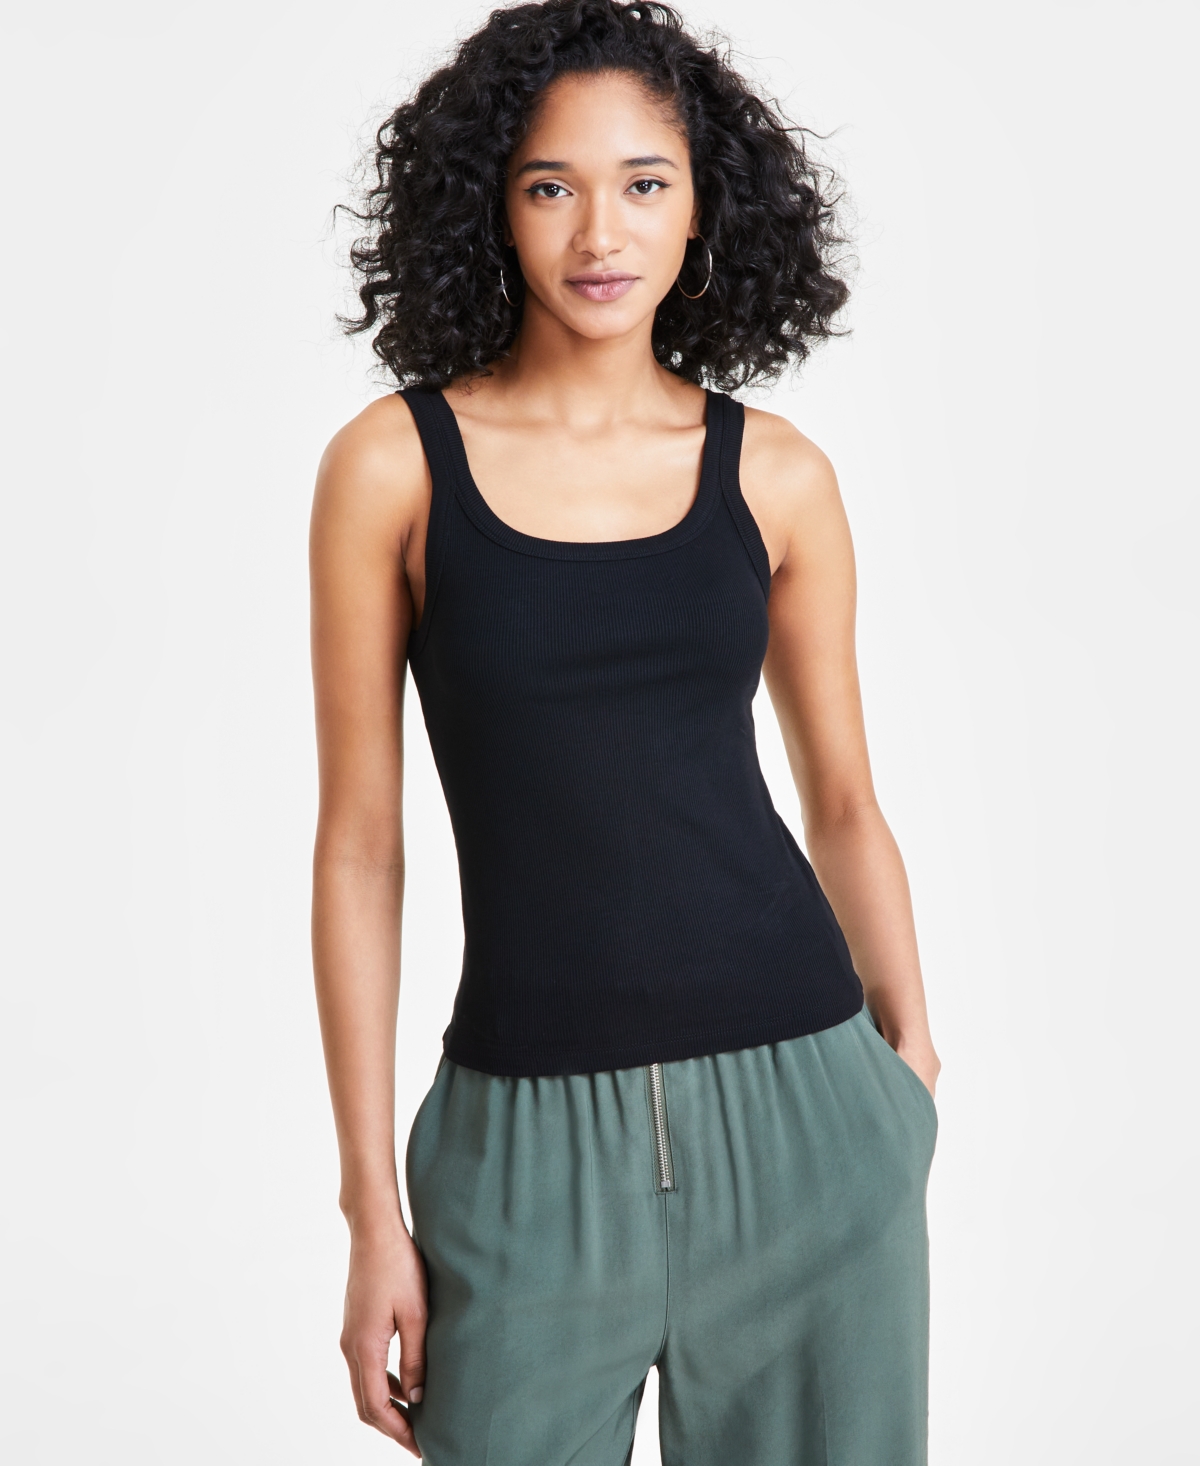 Women's Sleeveless Ribbed Tank Top, Created for Macy's - Bright Whi